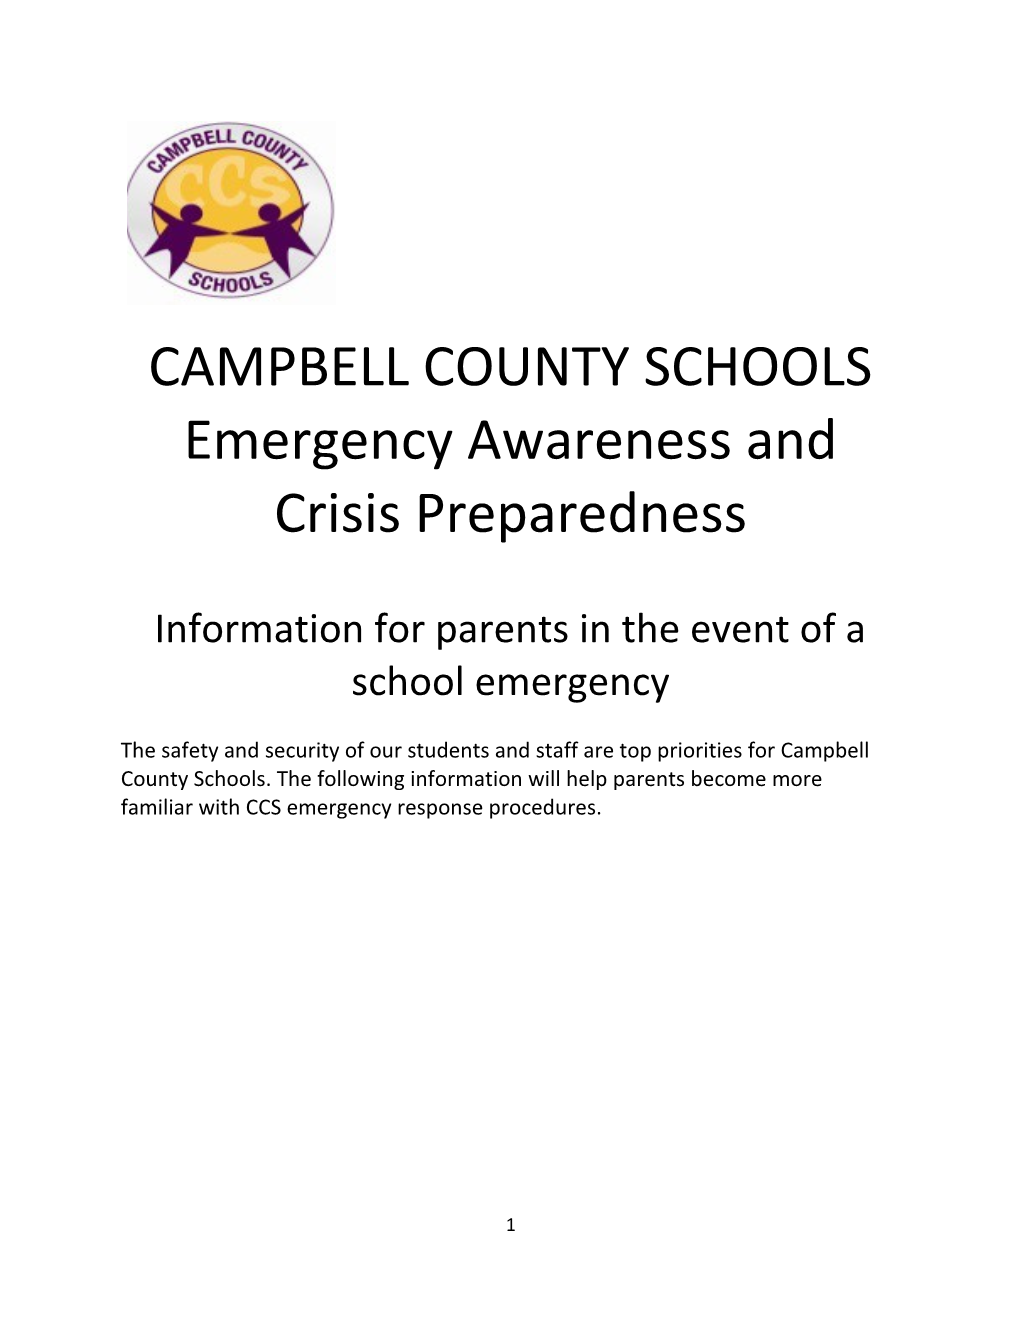 Emergency Awareness and Crisis Preparedness